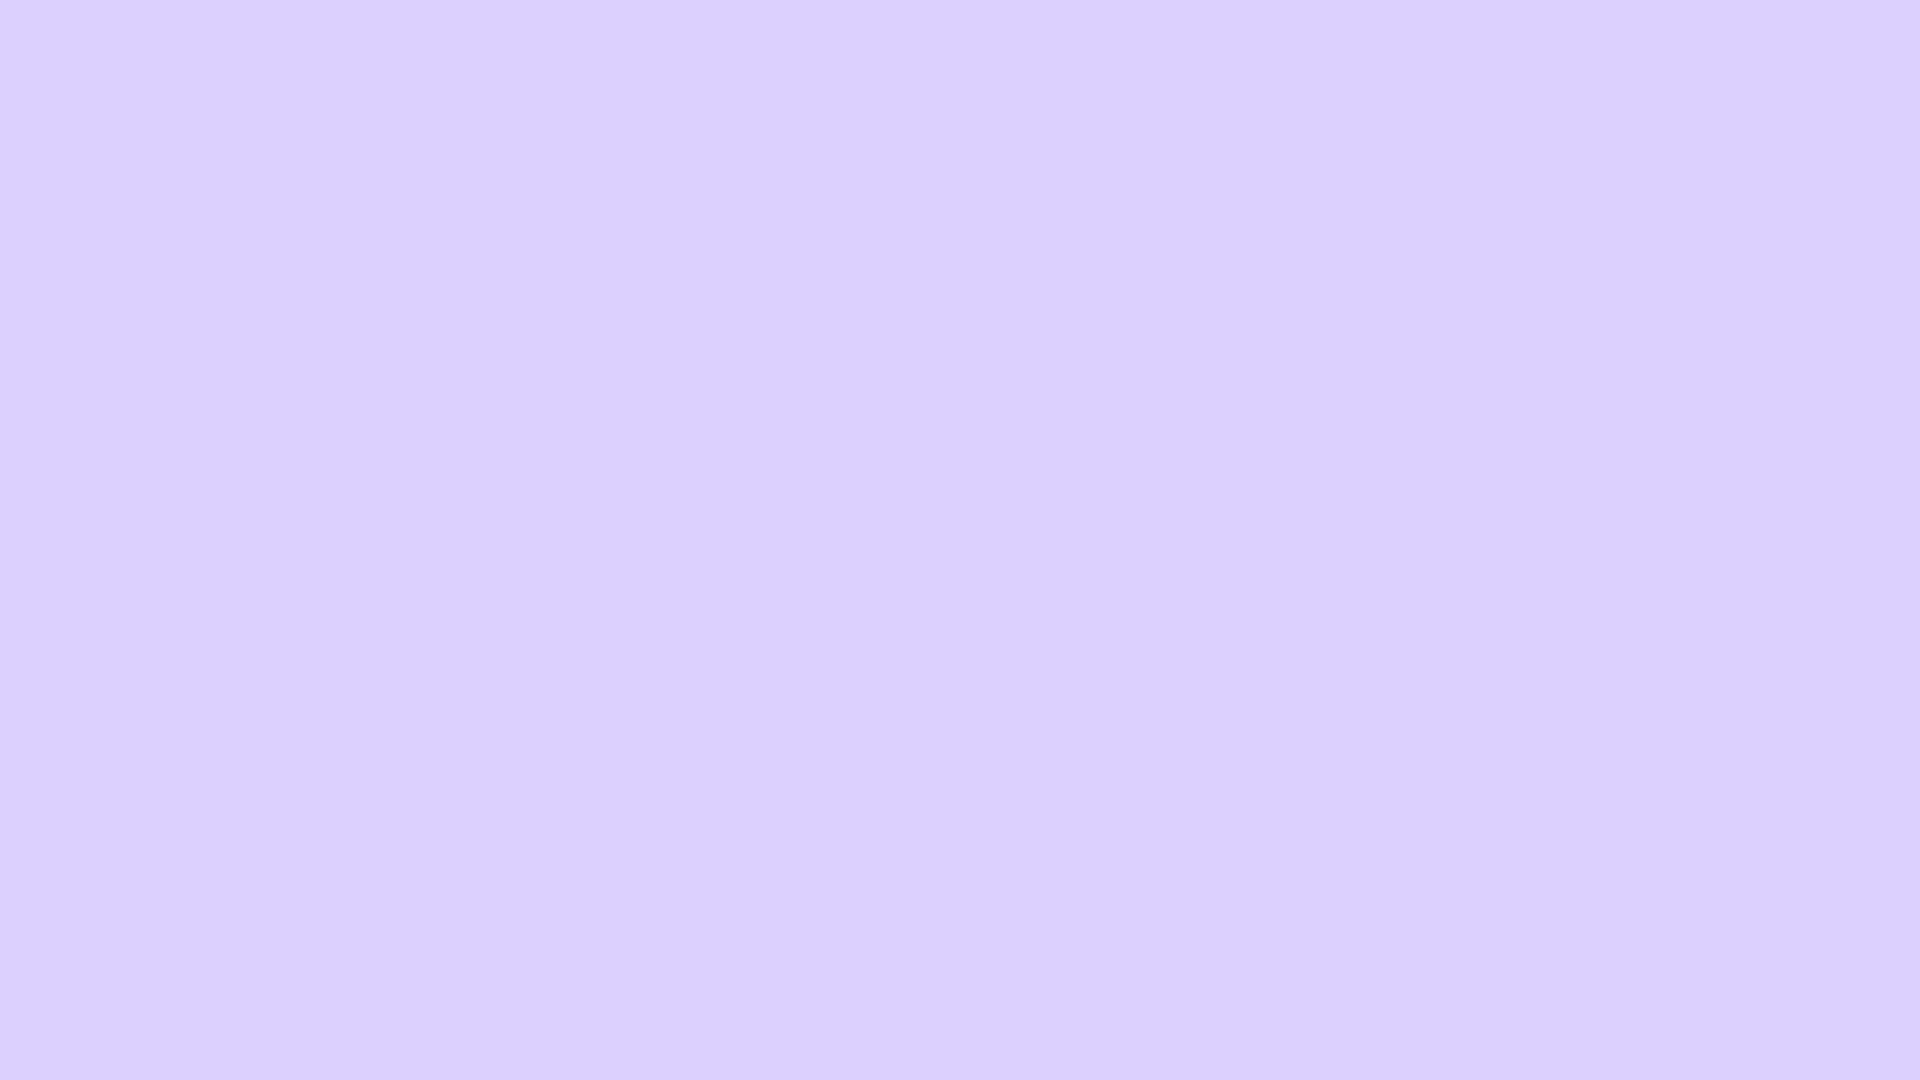 1920x1080 Pale Lavender Solid Color Background